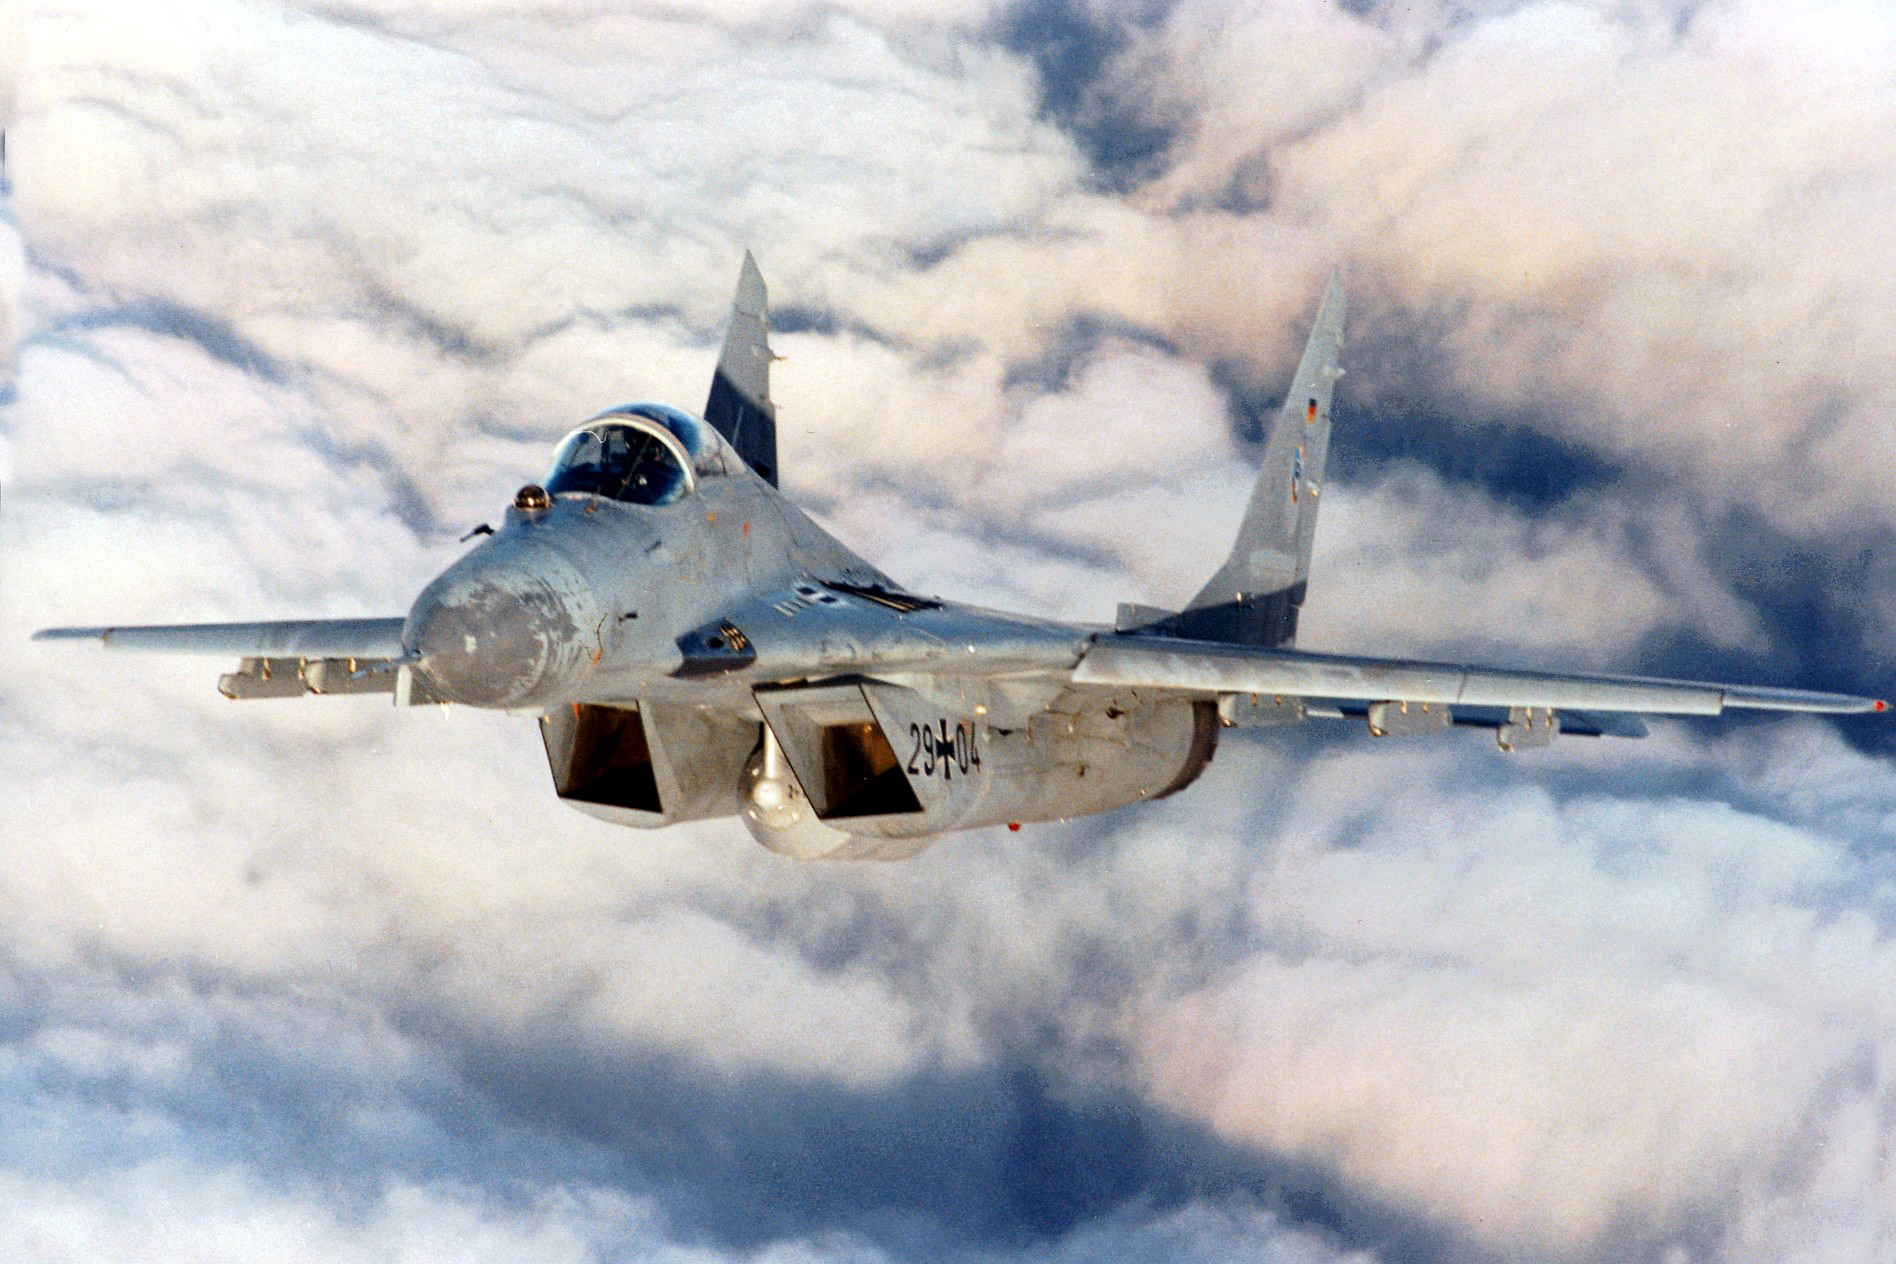 http://upload.wikimedia.org/wikipedia/commons/0/08/Mikoyan-Gurevich_MiG-29_Fulcrum.jpg